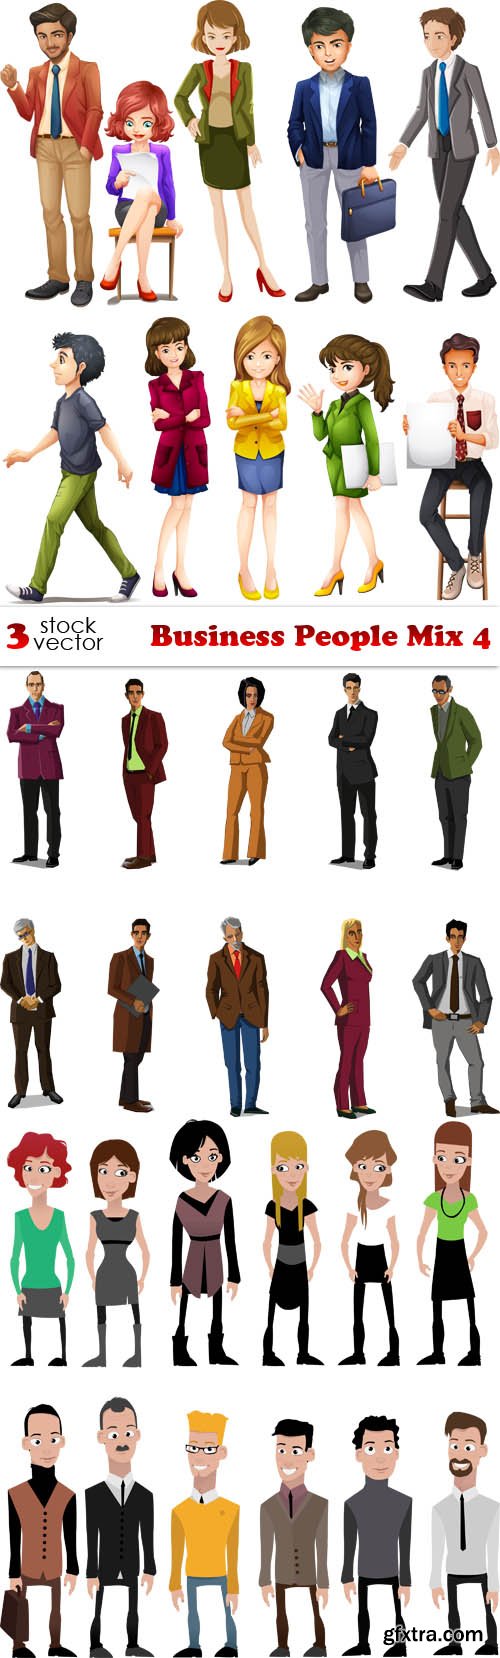 Vectors - Business People Mix 4